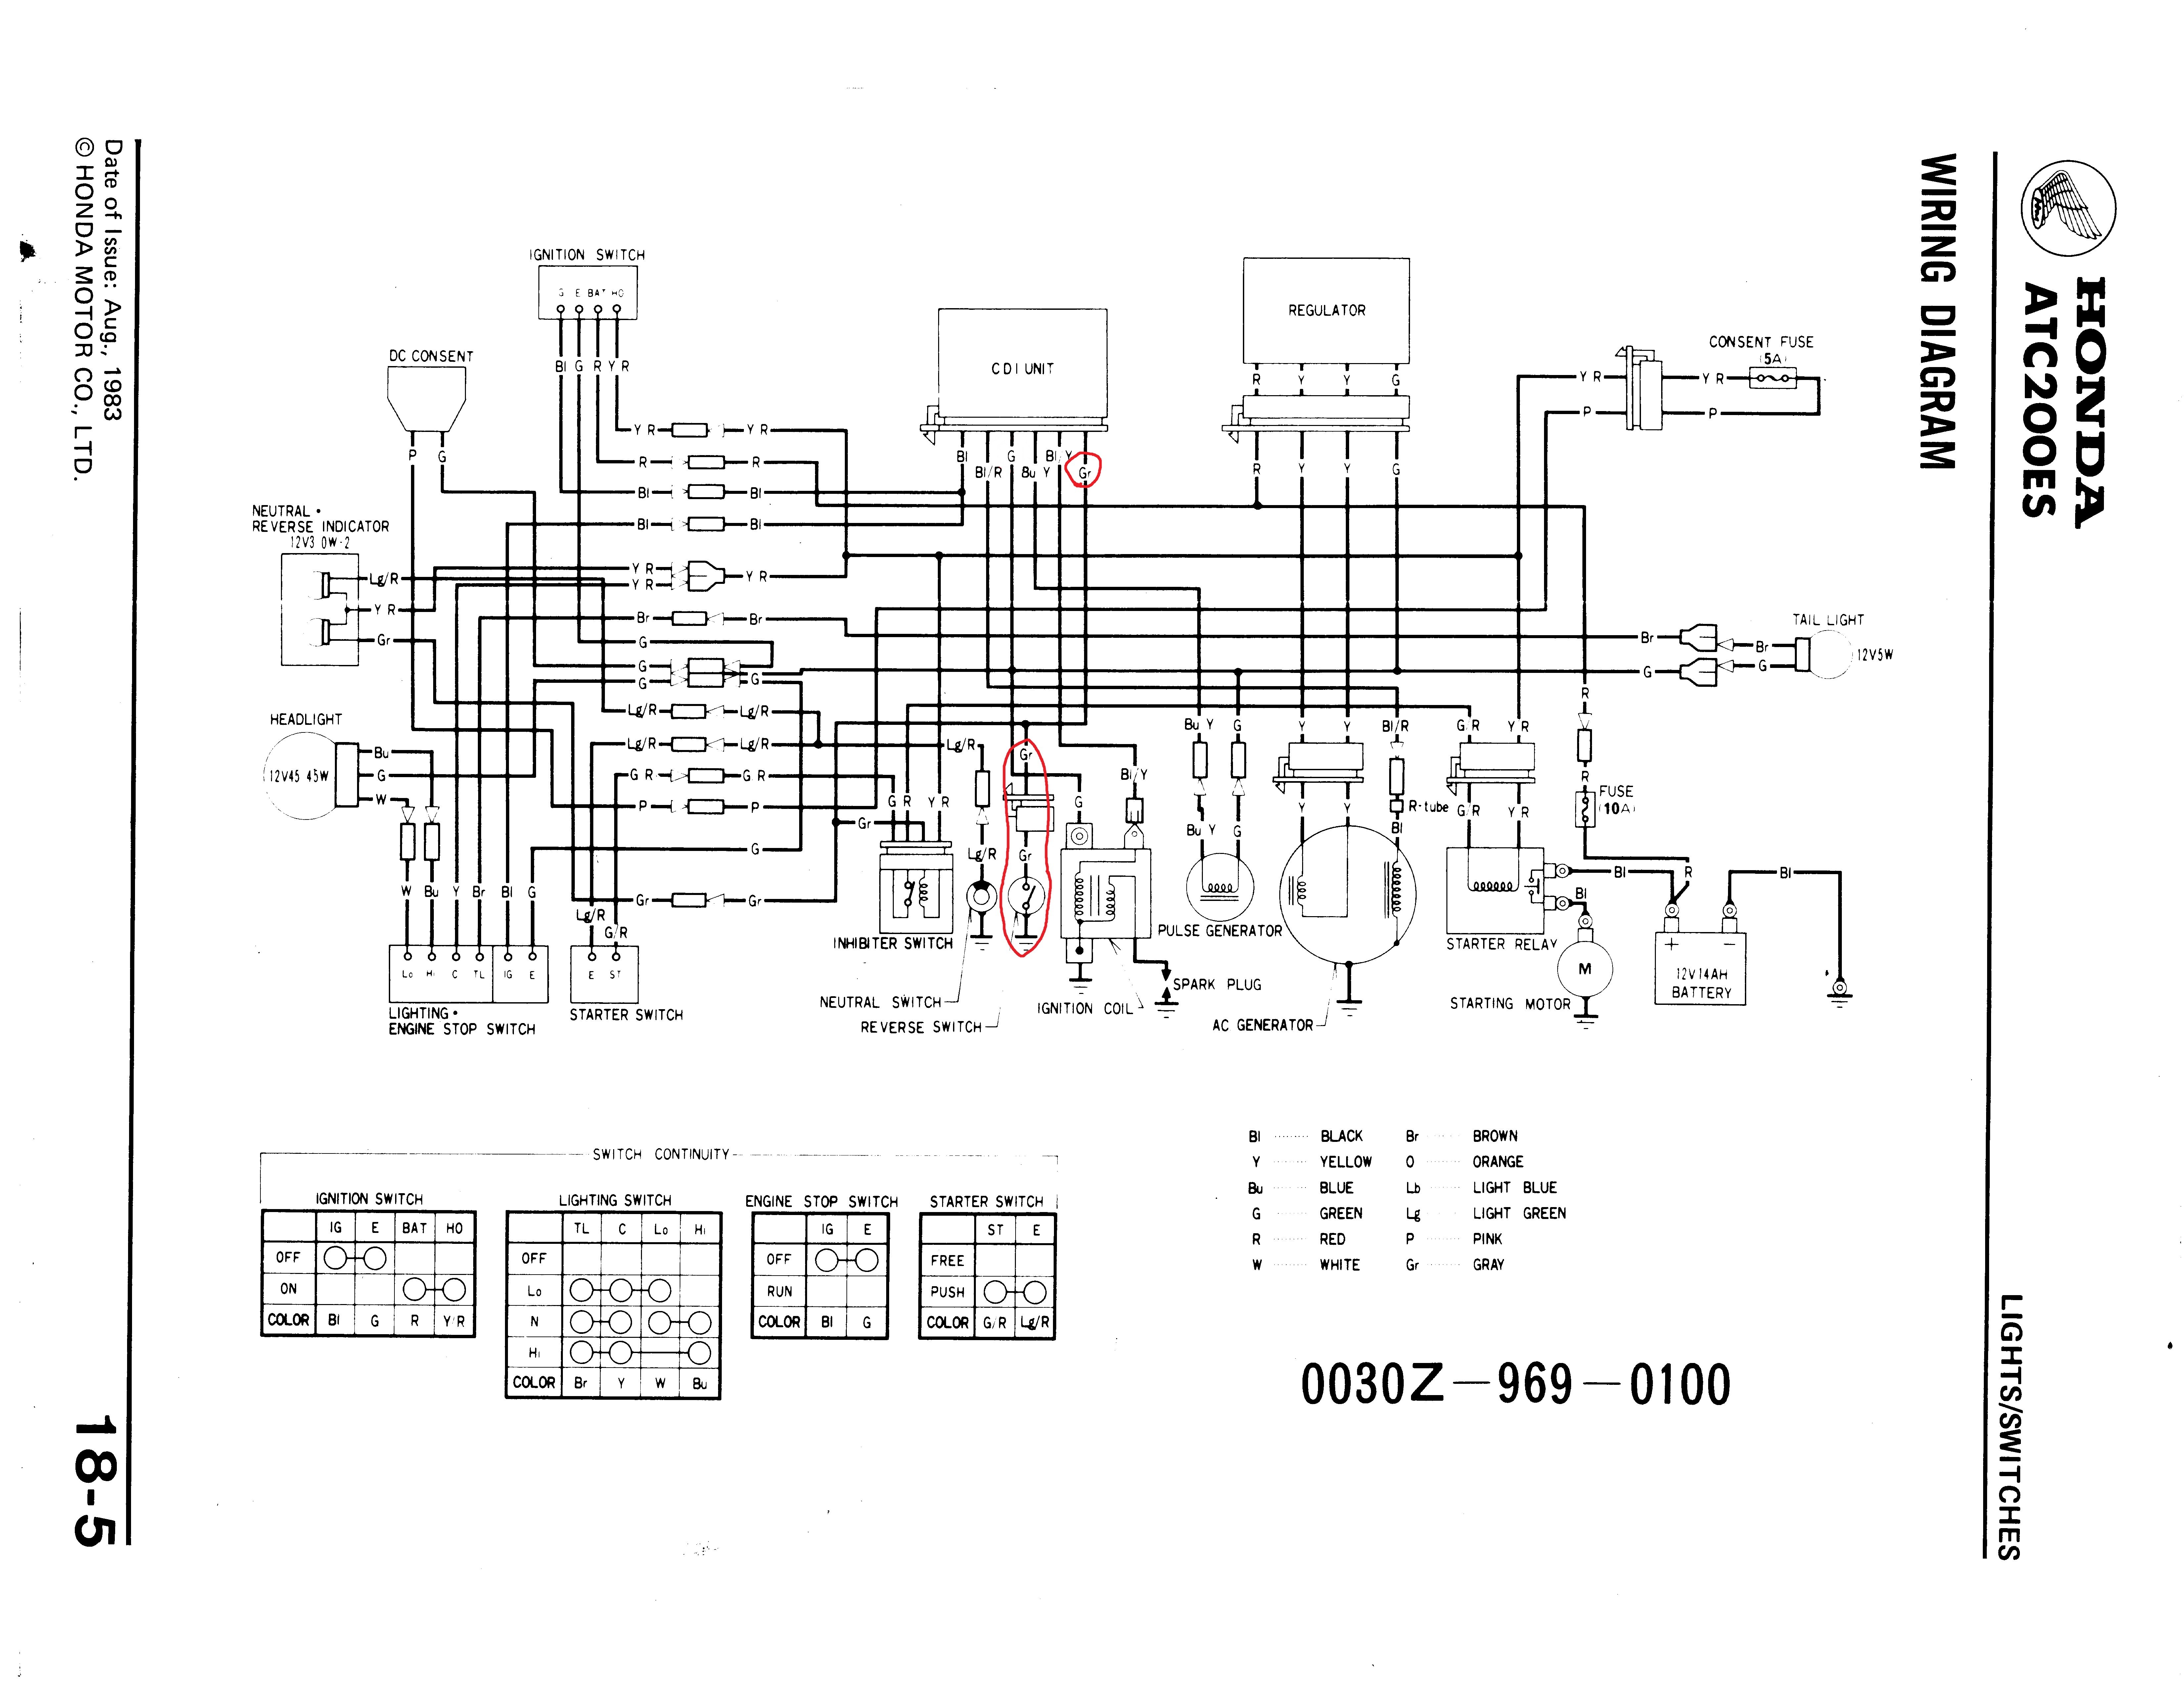 1996 Honda Accord Engine Diagram 1996 Honda 300 Trx Wiring Diagram Honda Wiring Diagrams Instructions Of 1996 Honda Accord Engine Diagram